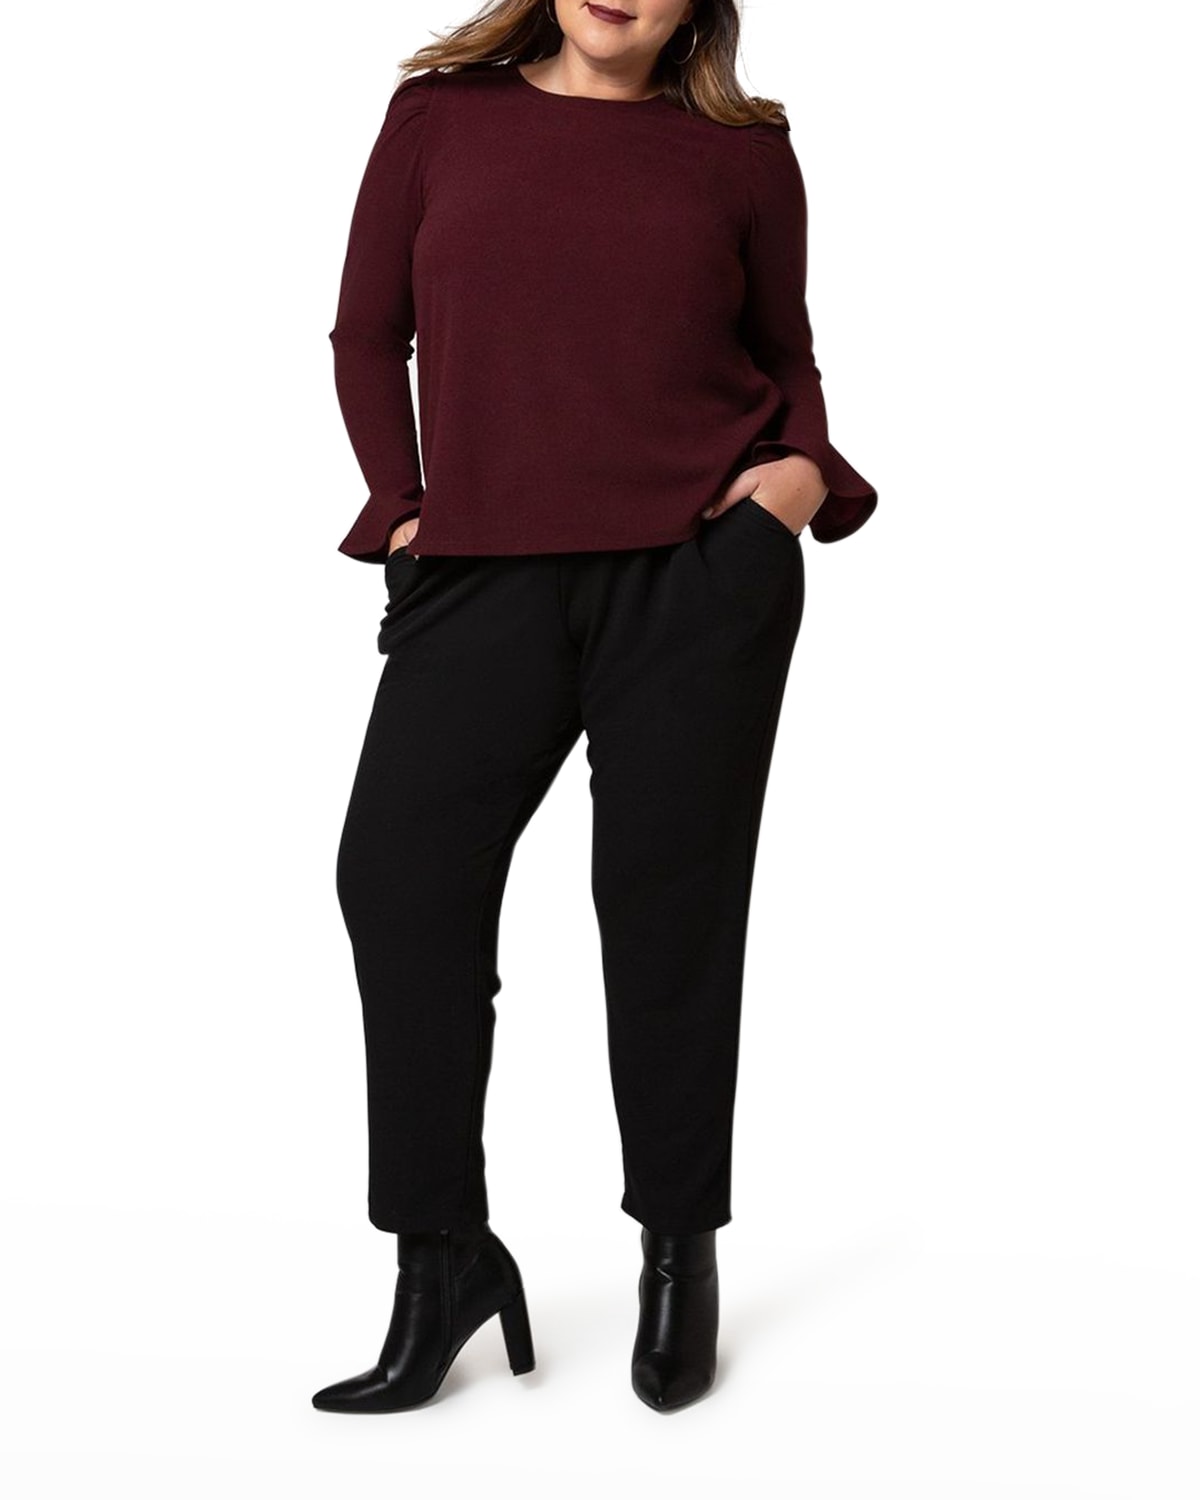 Leota Plus Size Jennifer Ruffle-Sleeve Top